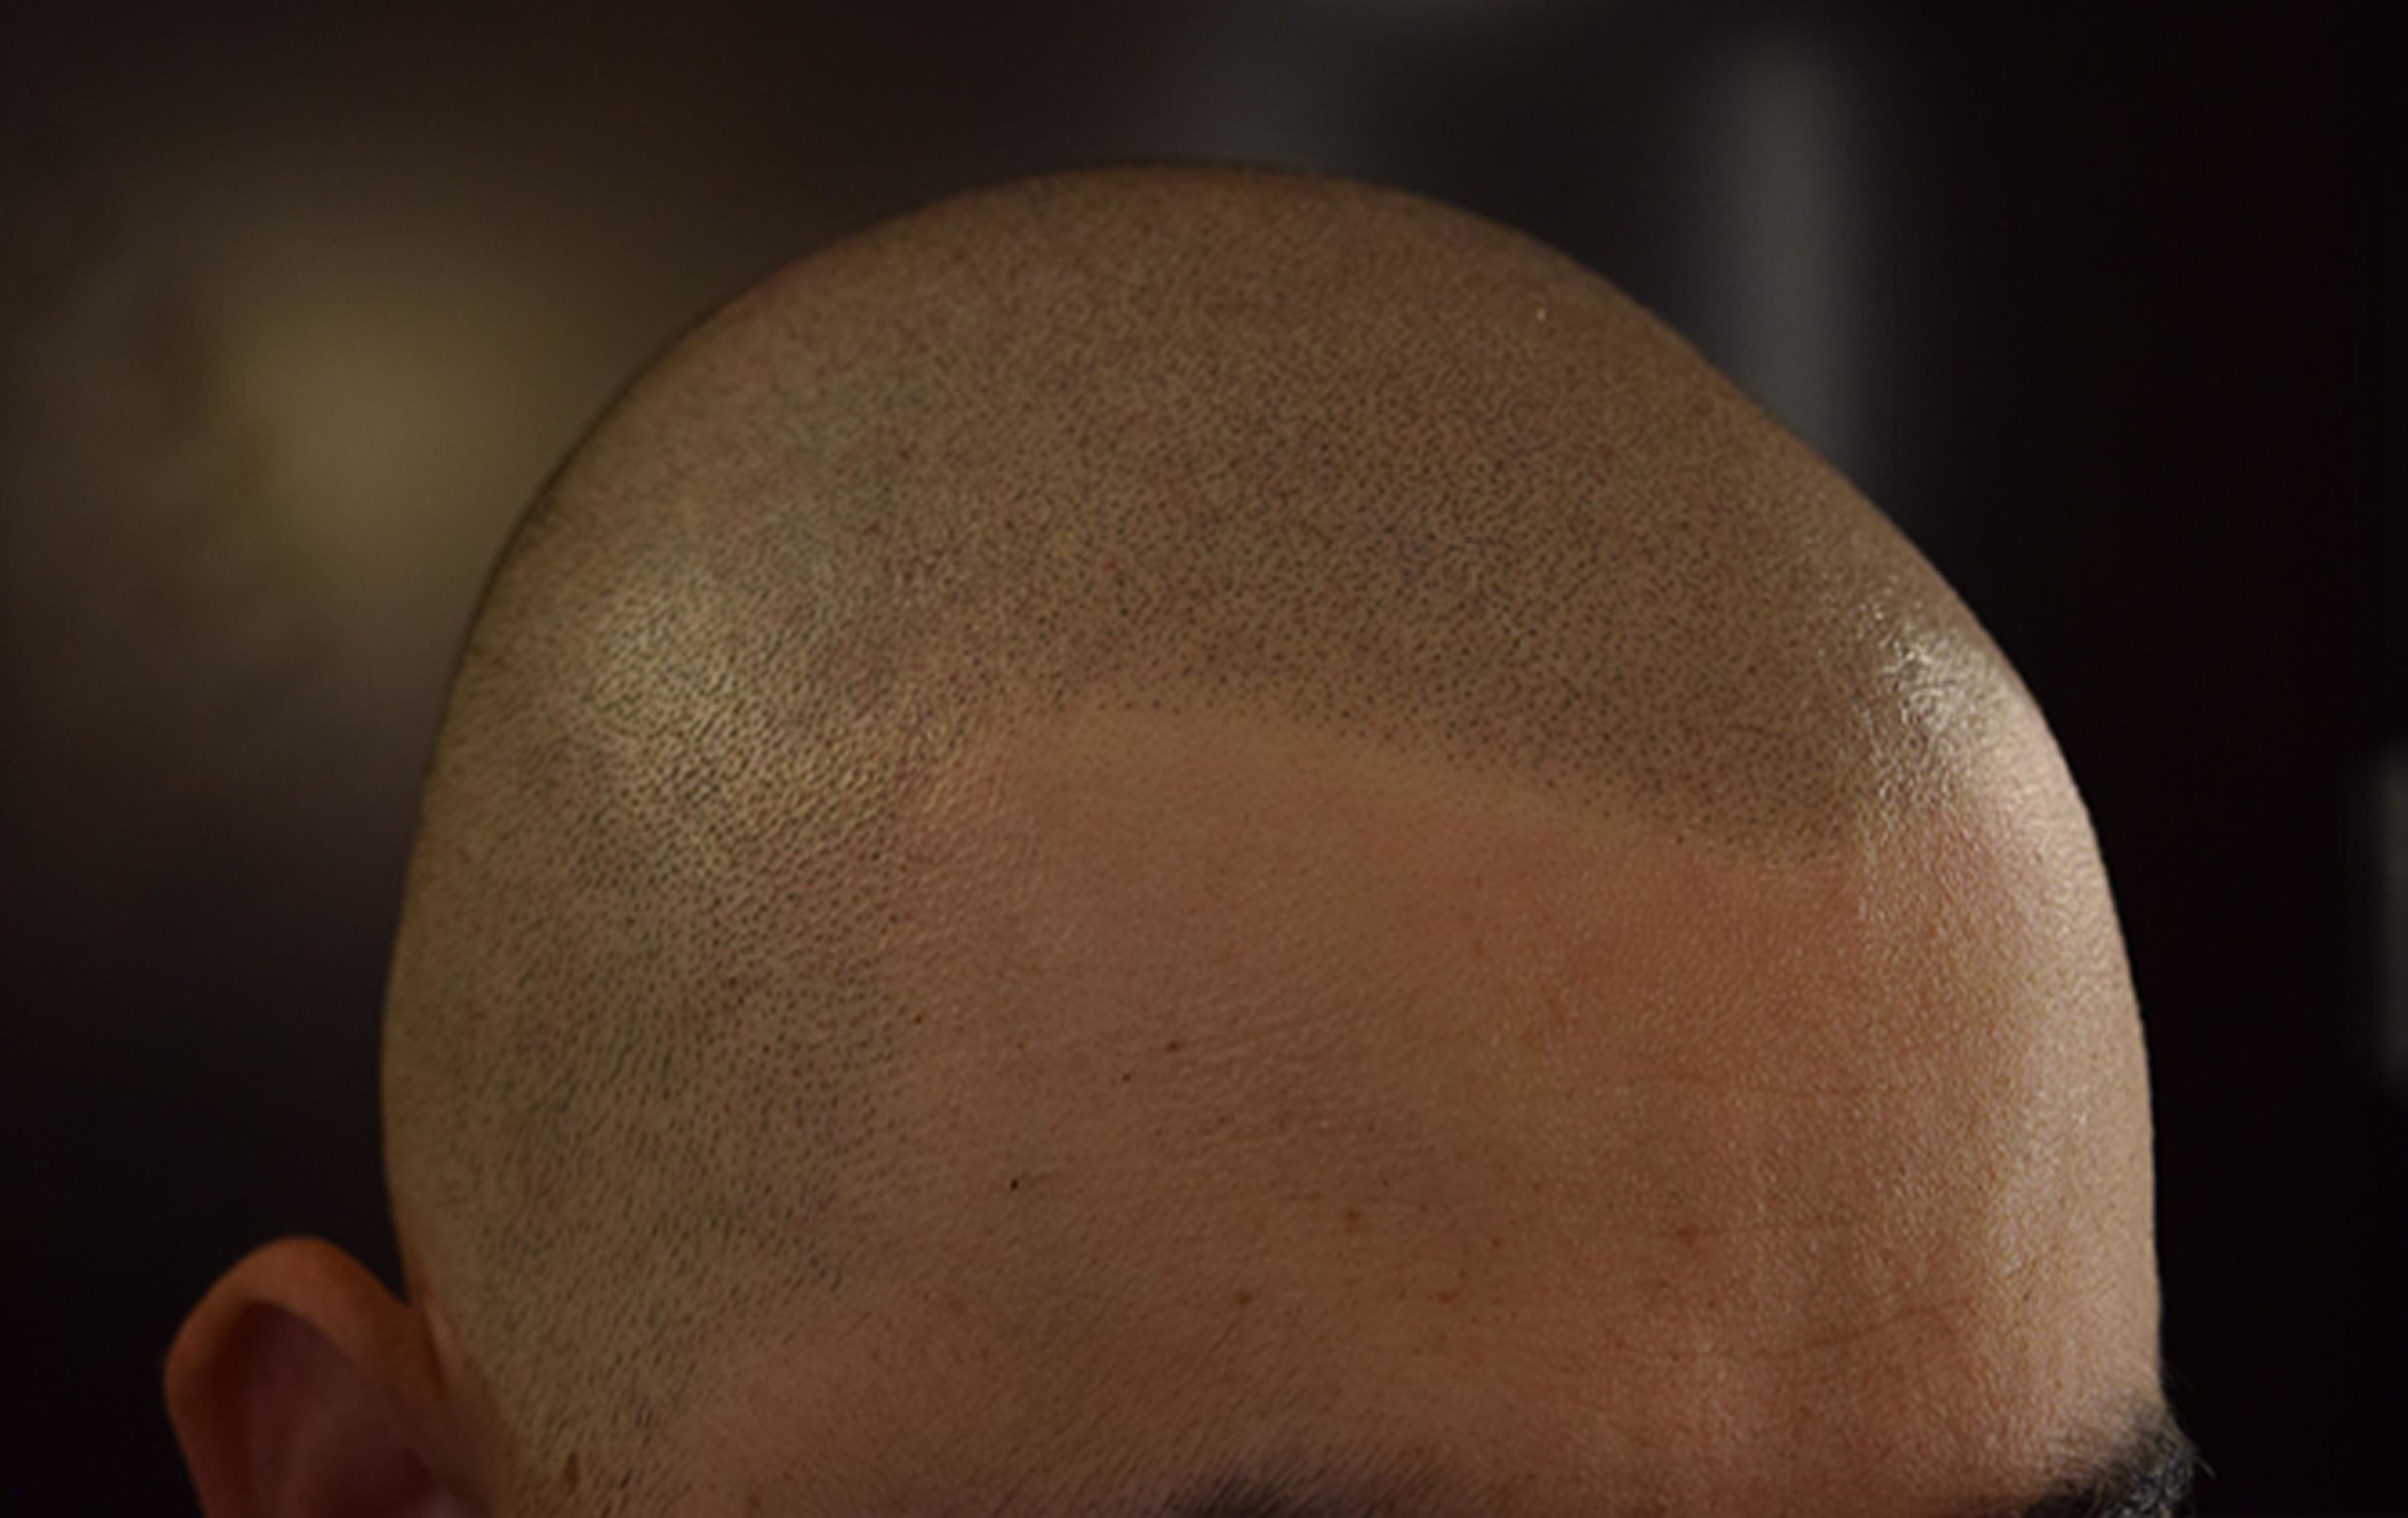 scalp micropigmentation smp in Phoenix